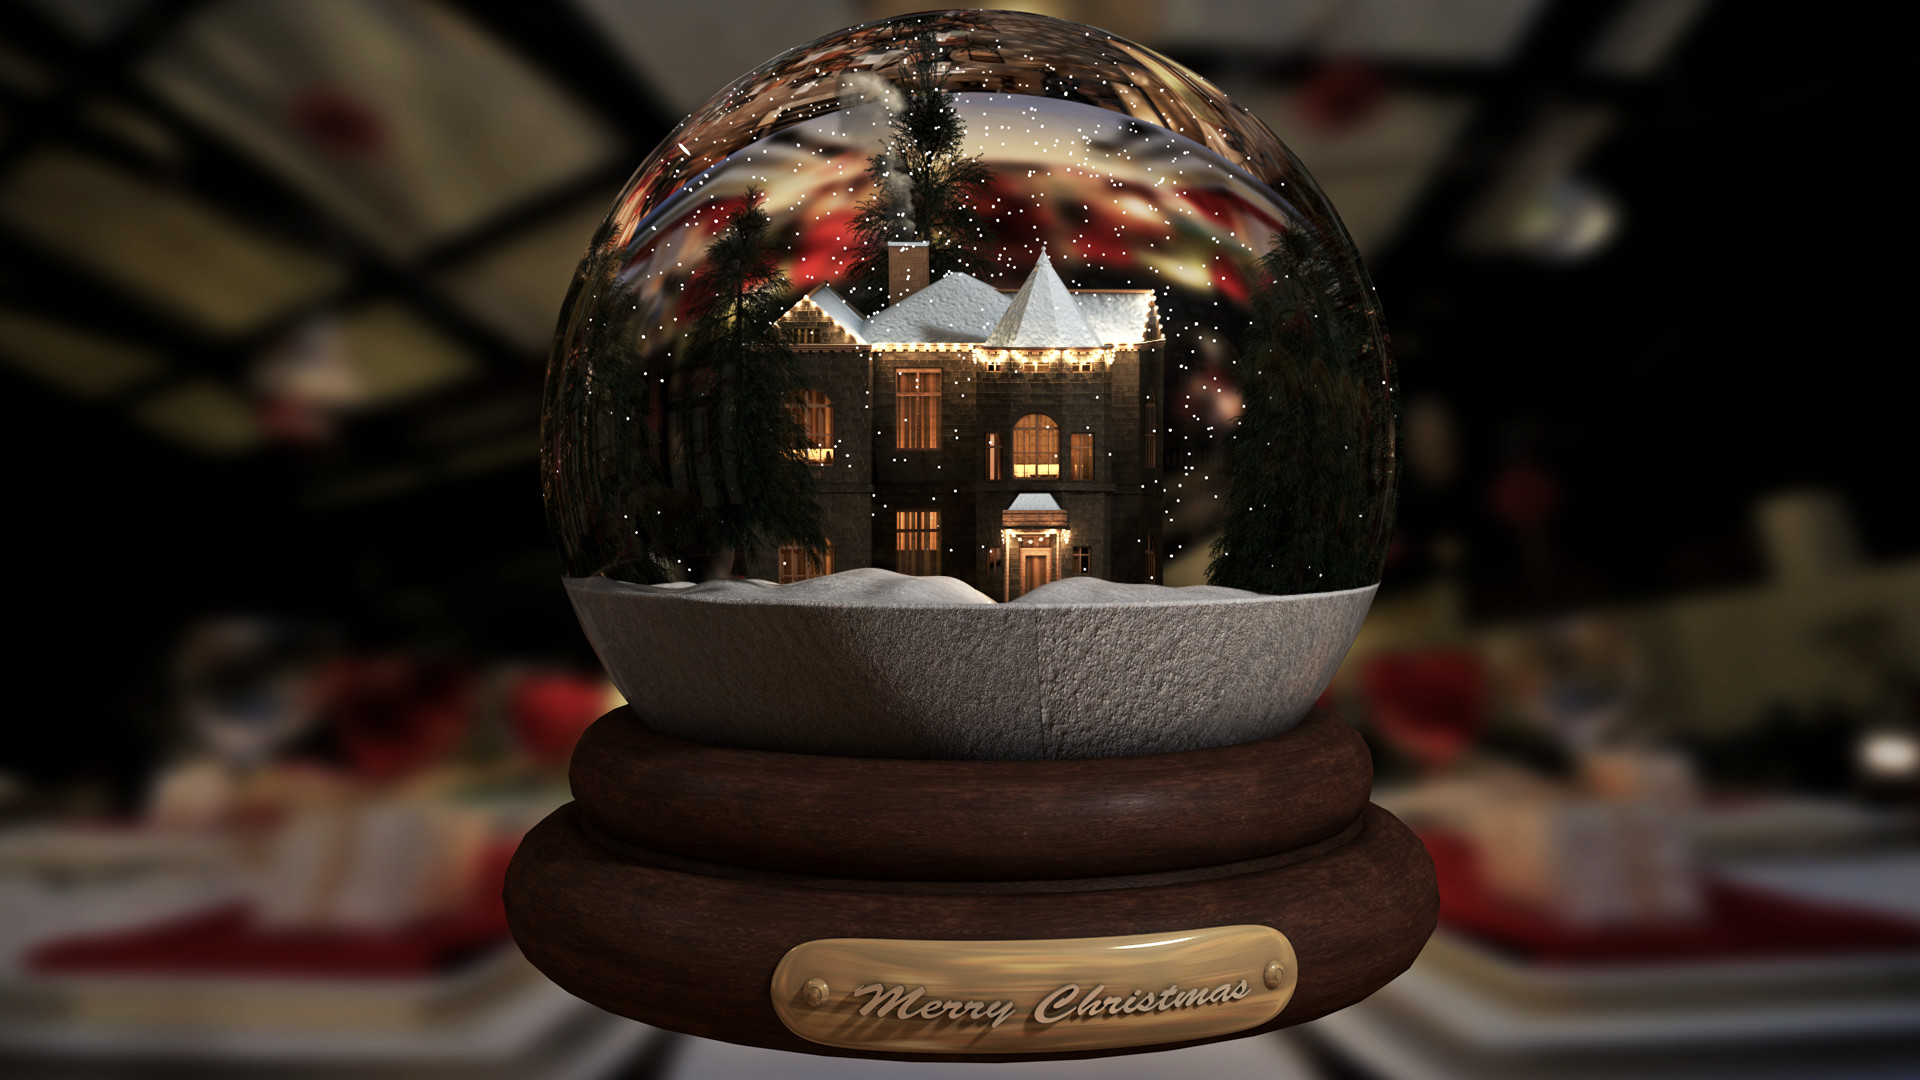 ArtStation - Christmas ball shake